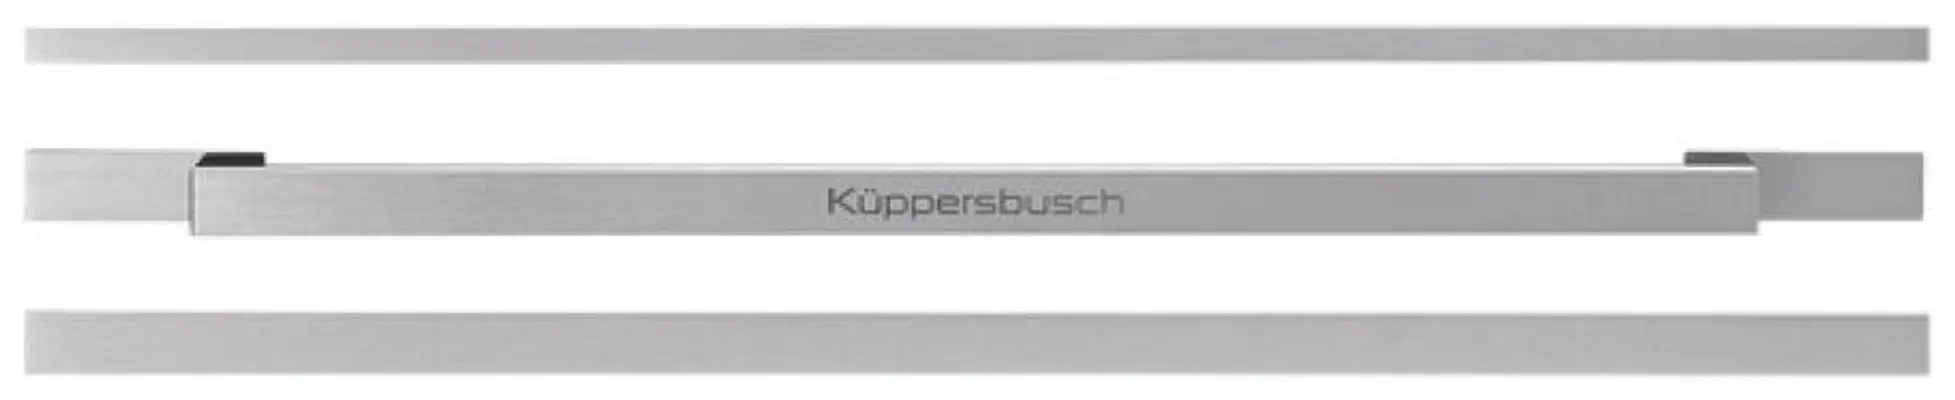 DK1004-Kuppersbusch-Koel-vries-accessoires